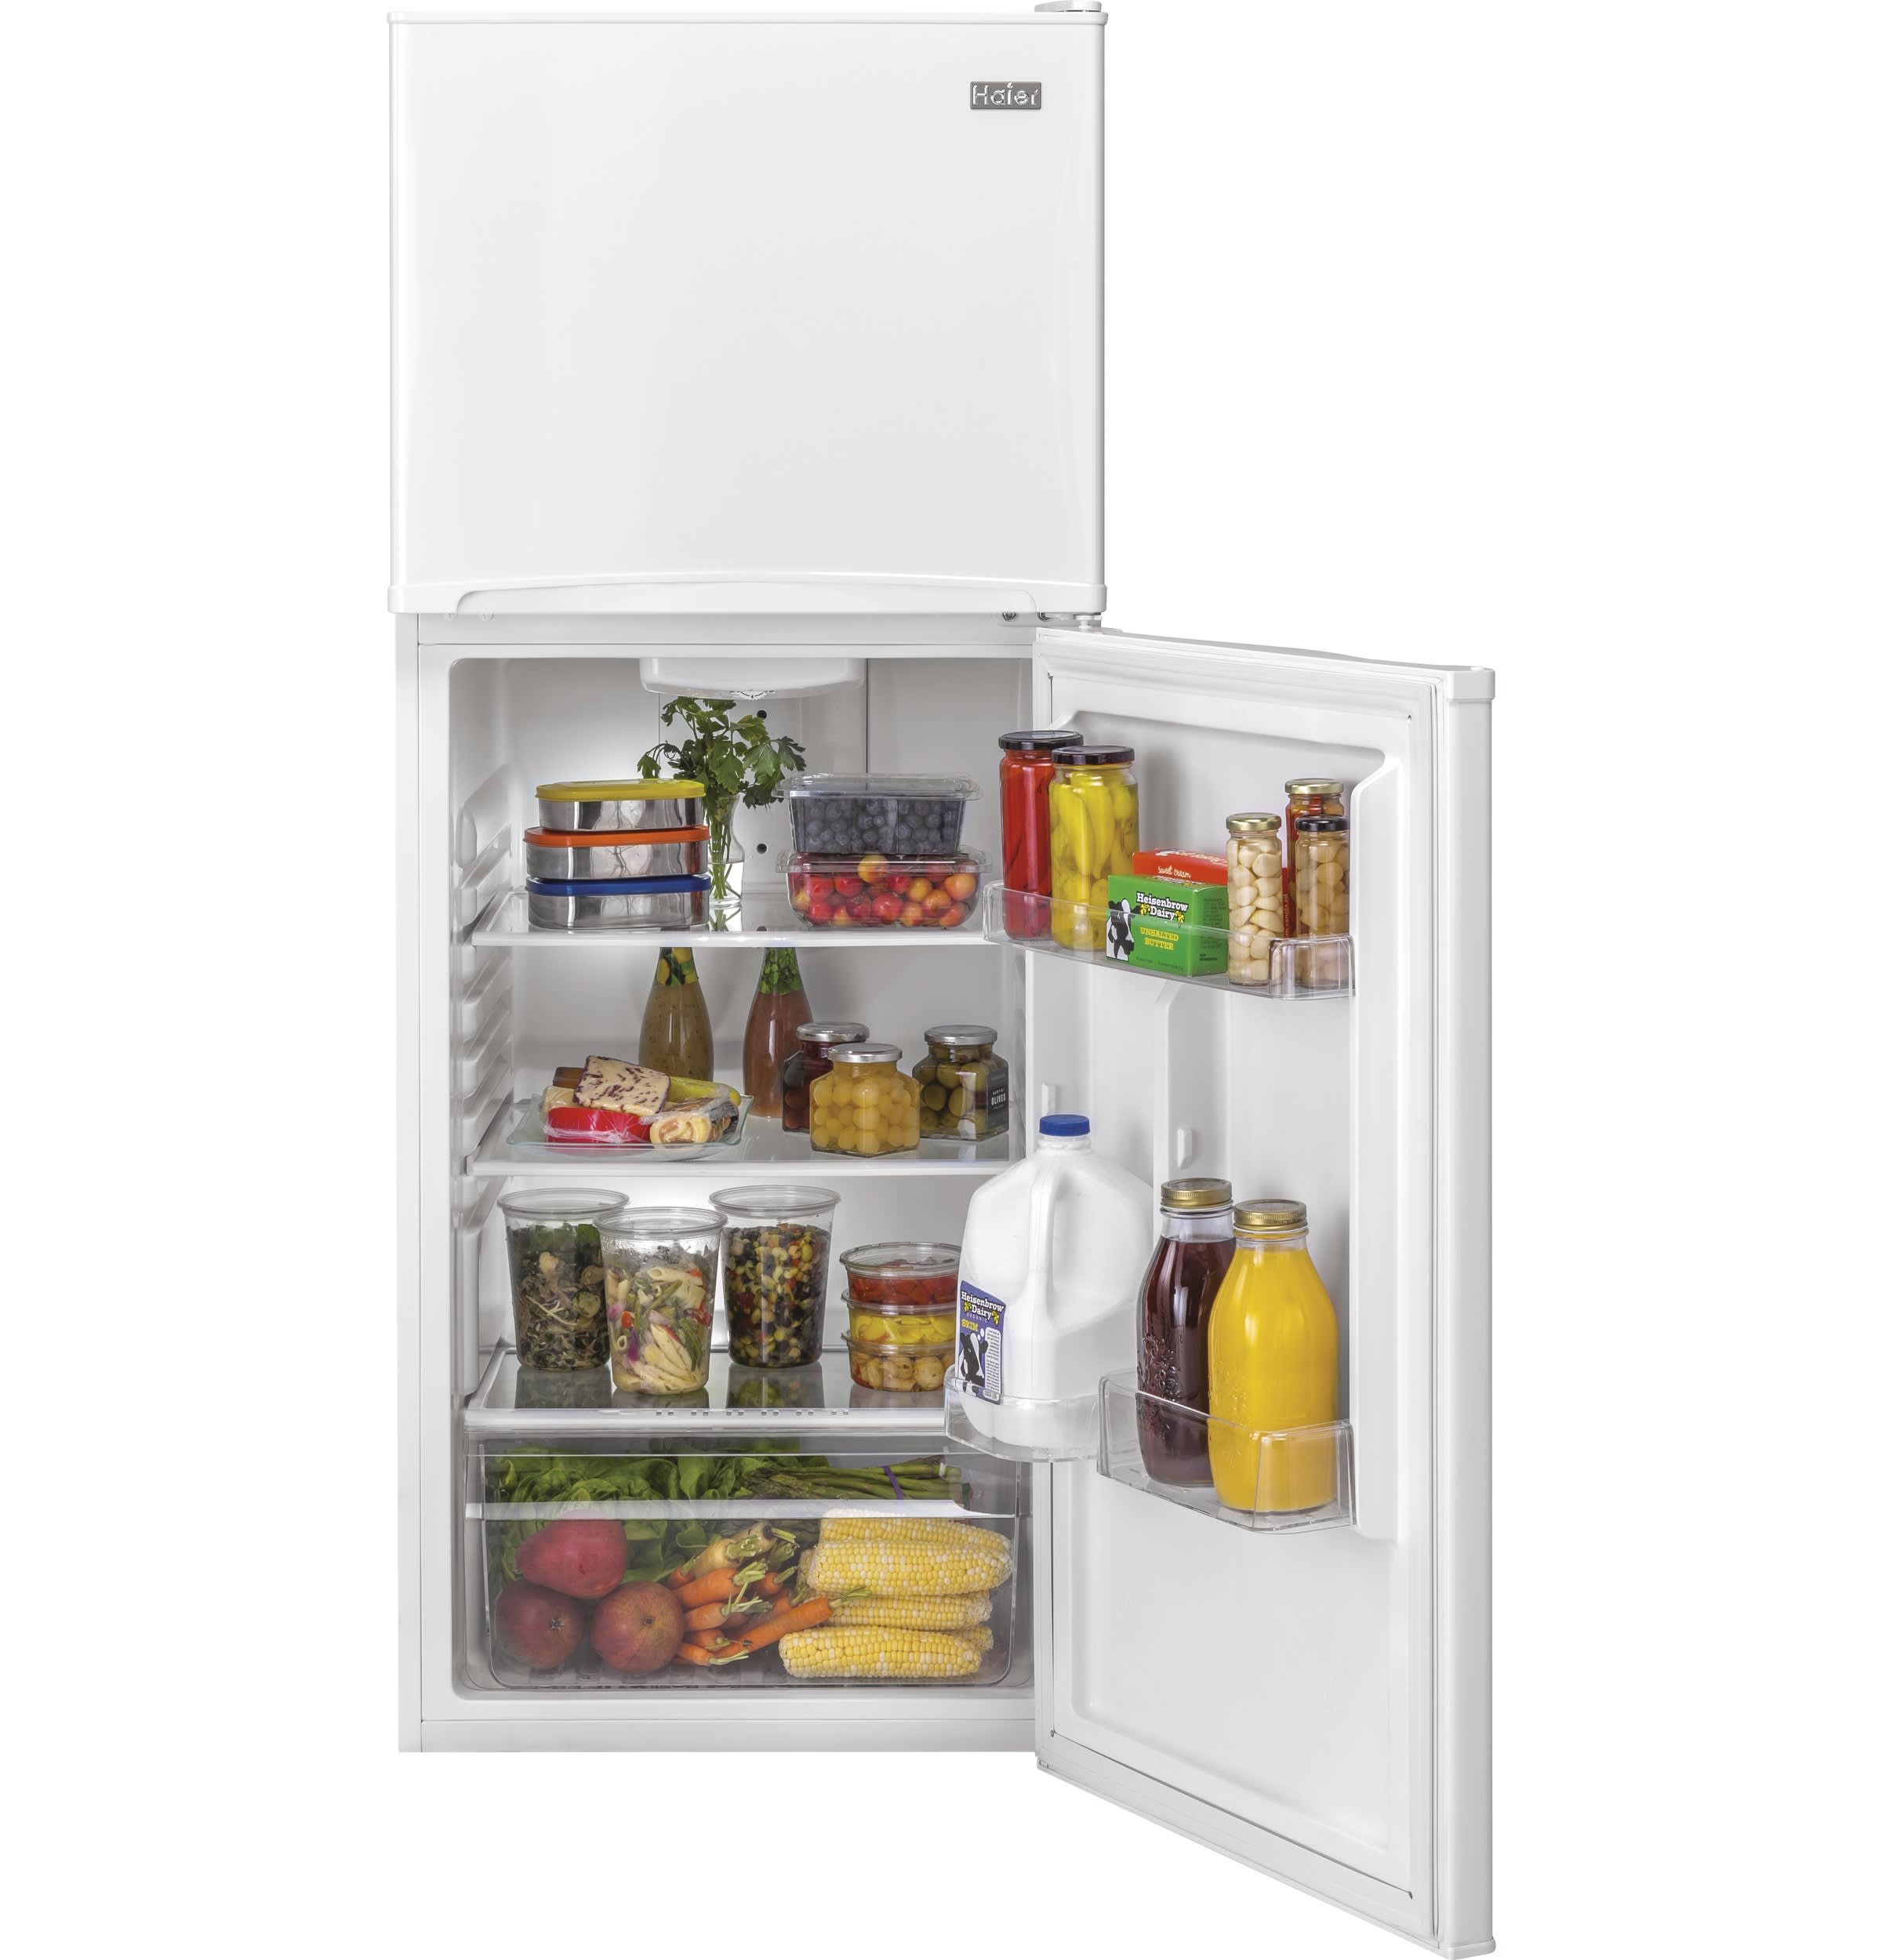 Haier HA10TG21SB 24 Inch Black Counter Depth Top Freezer Refrigerator